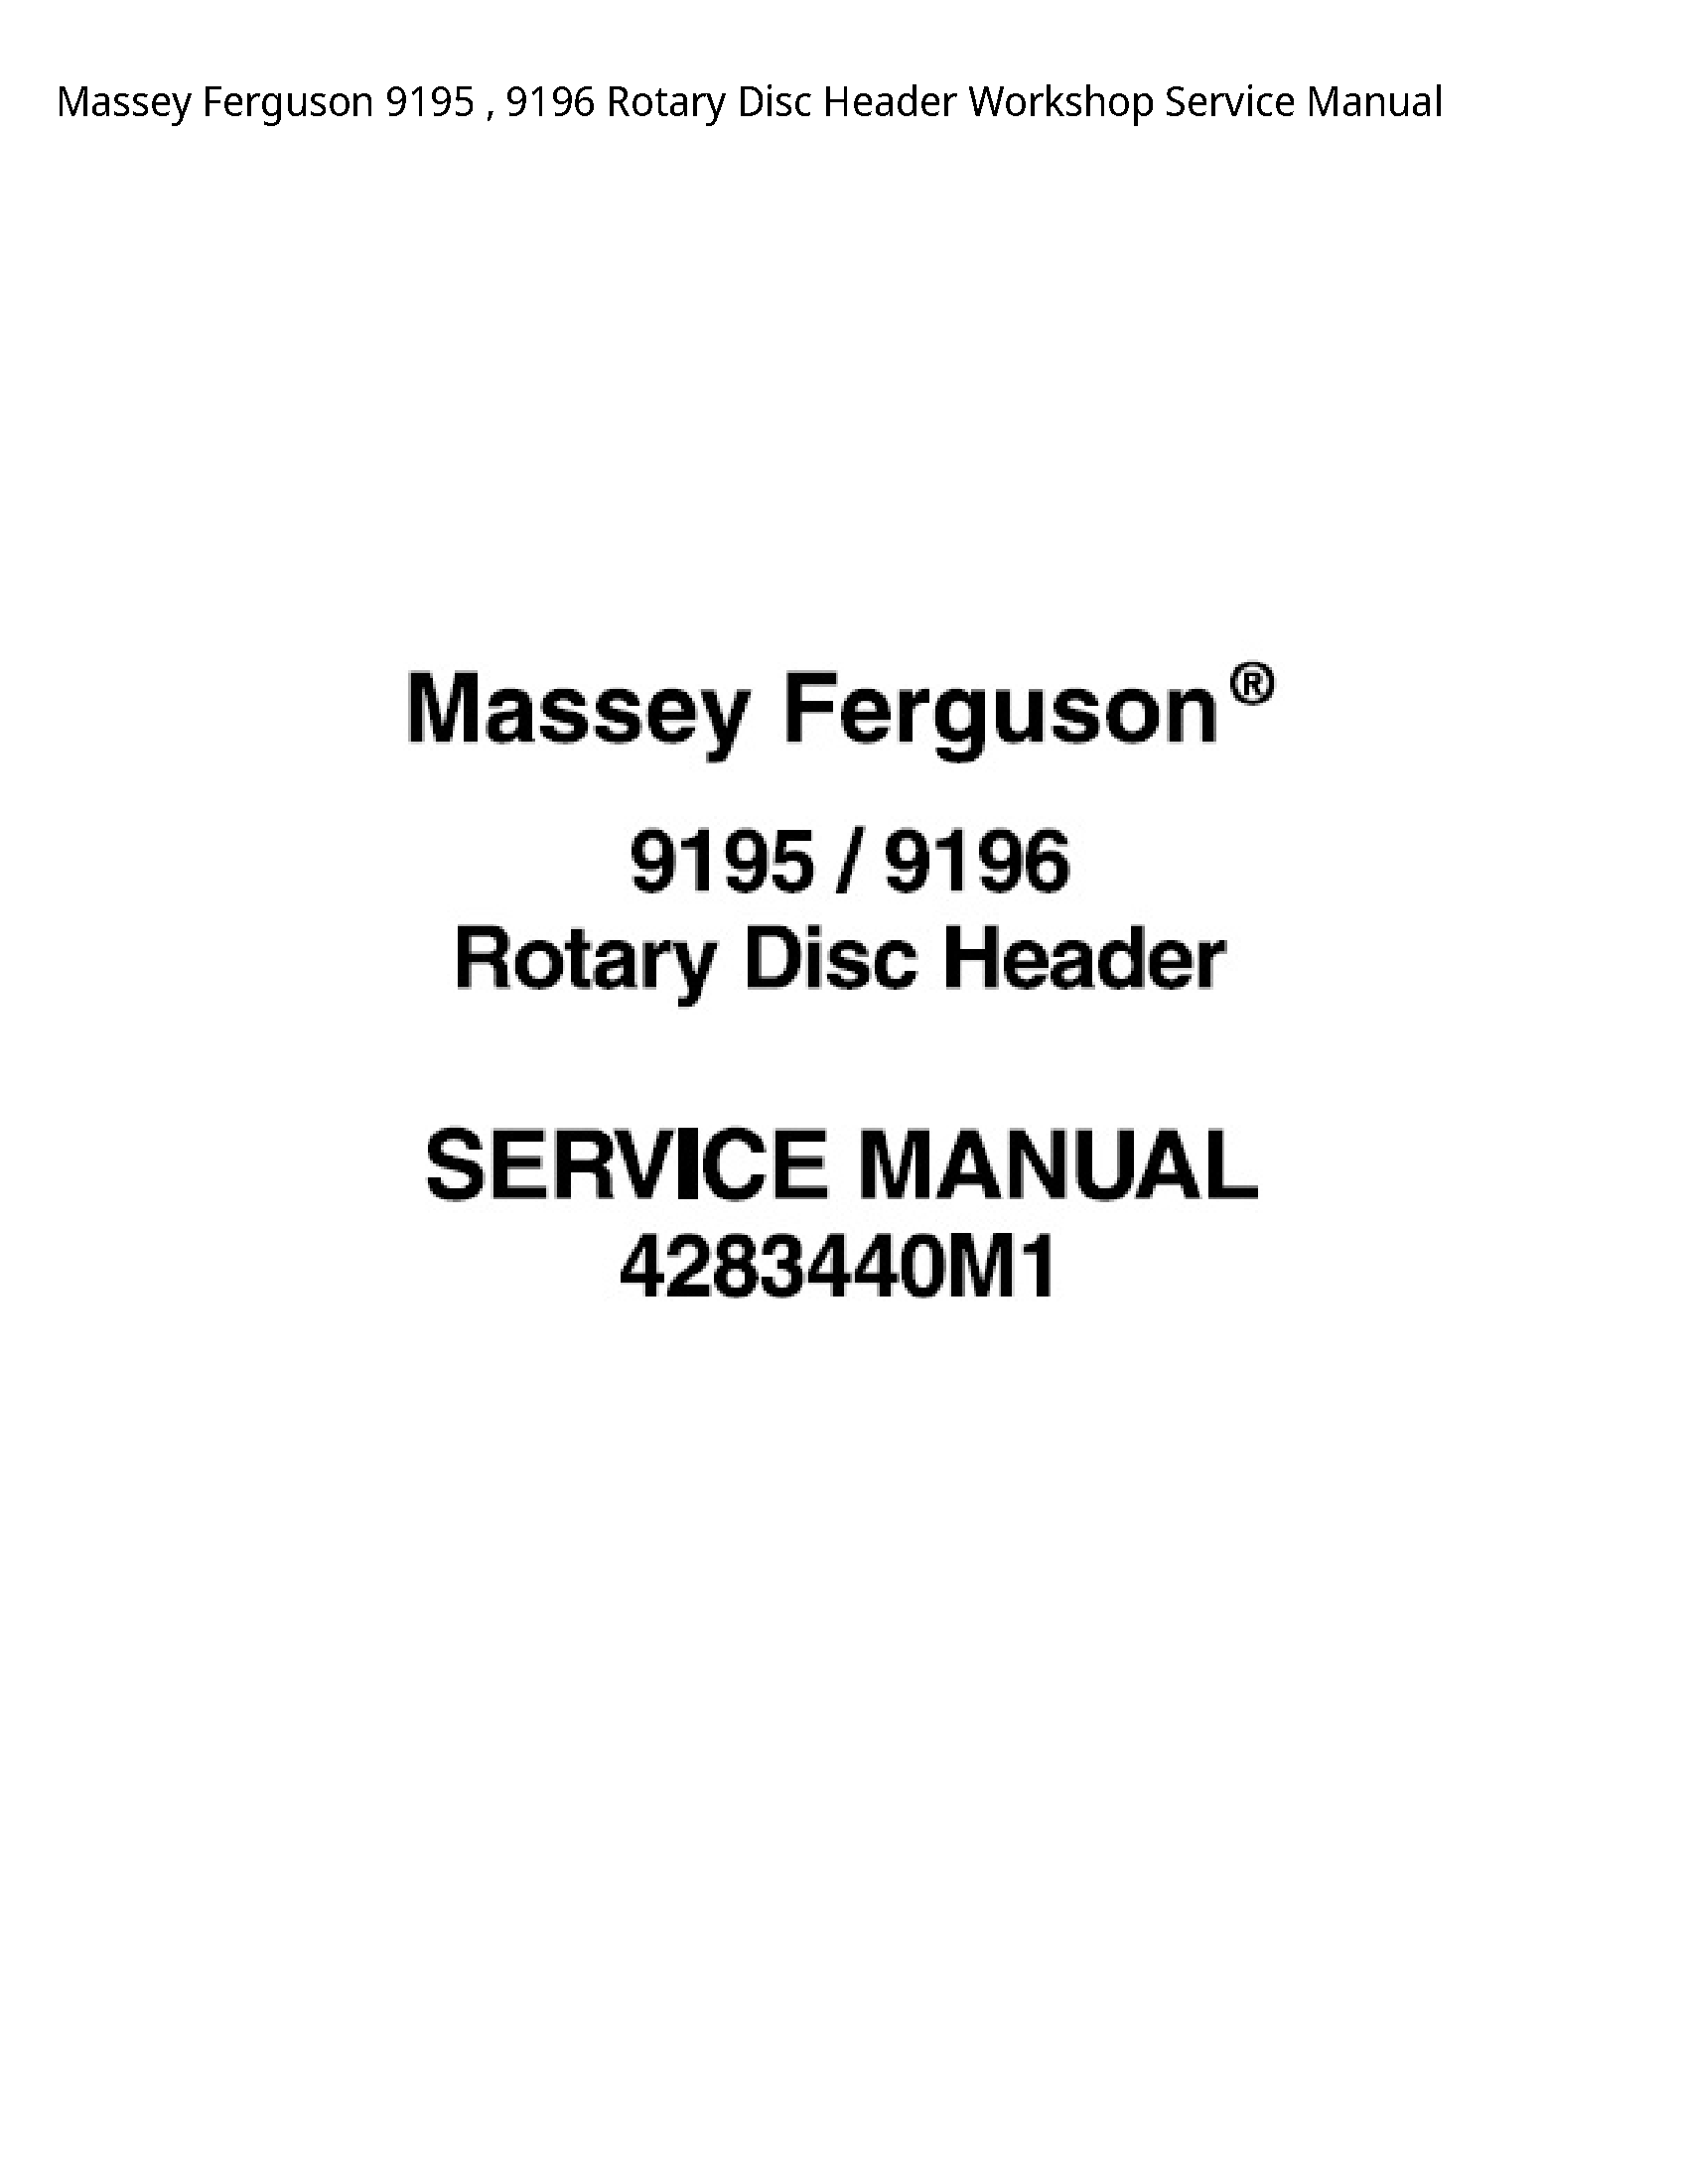 Massey Ferguson 9195 Rotary Disc Header Service manual